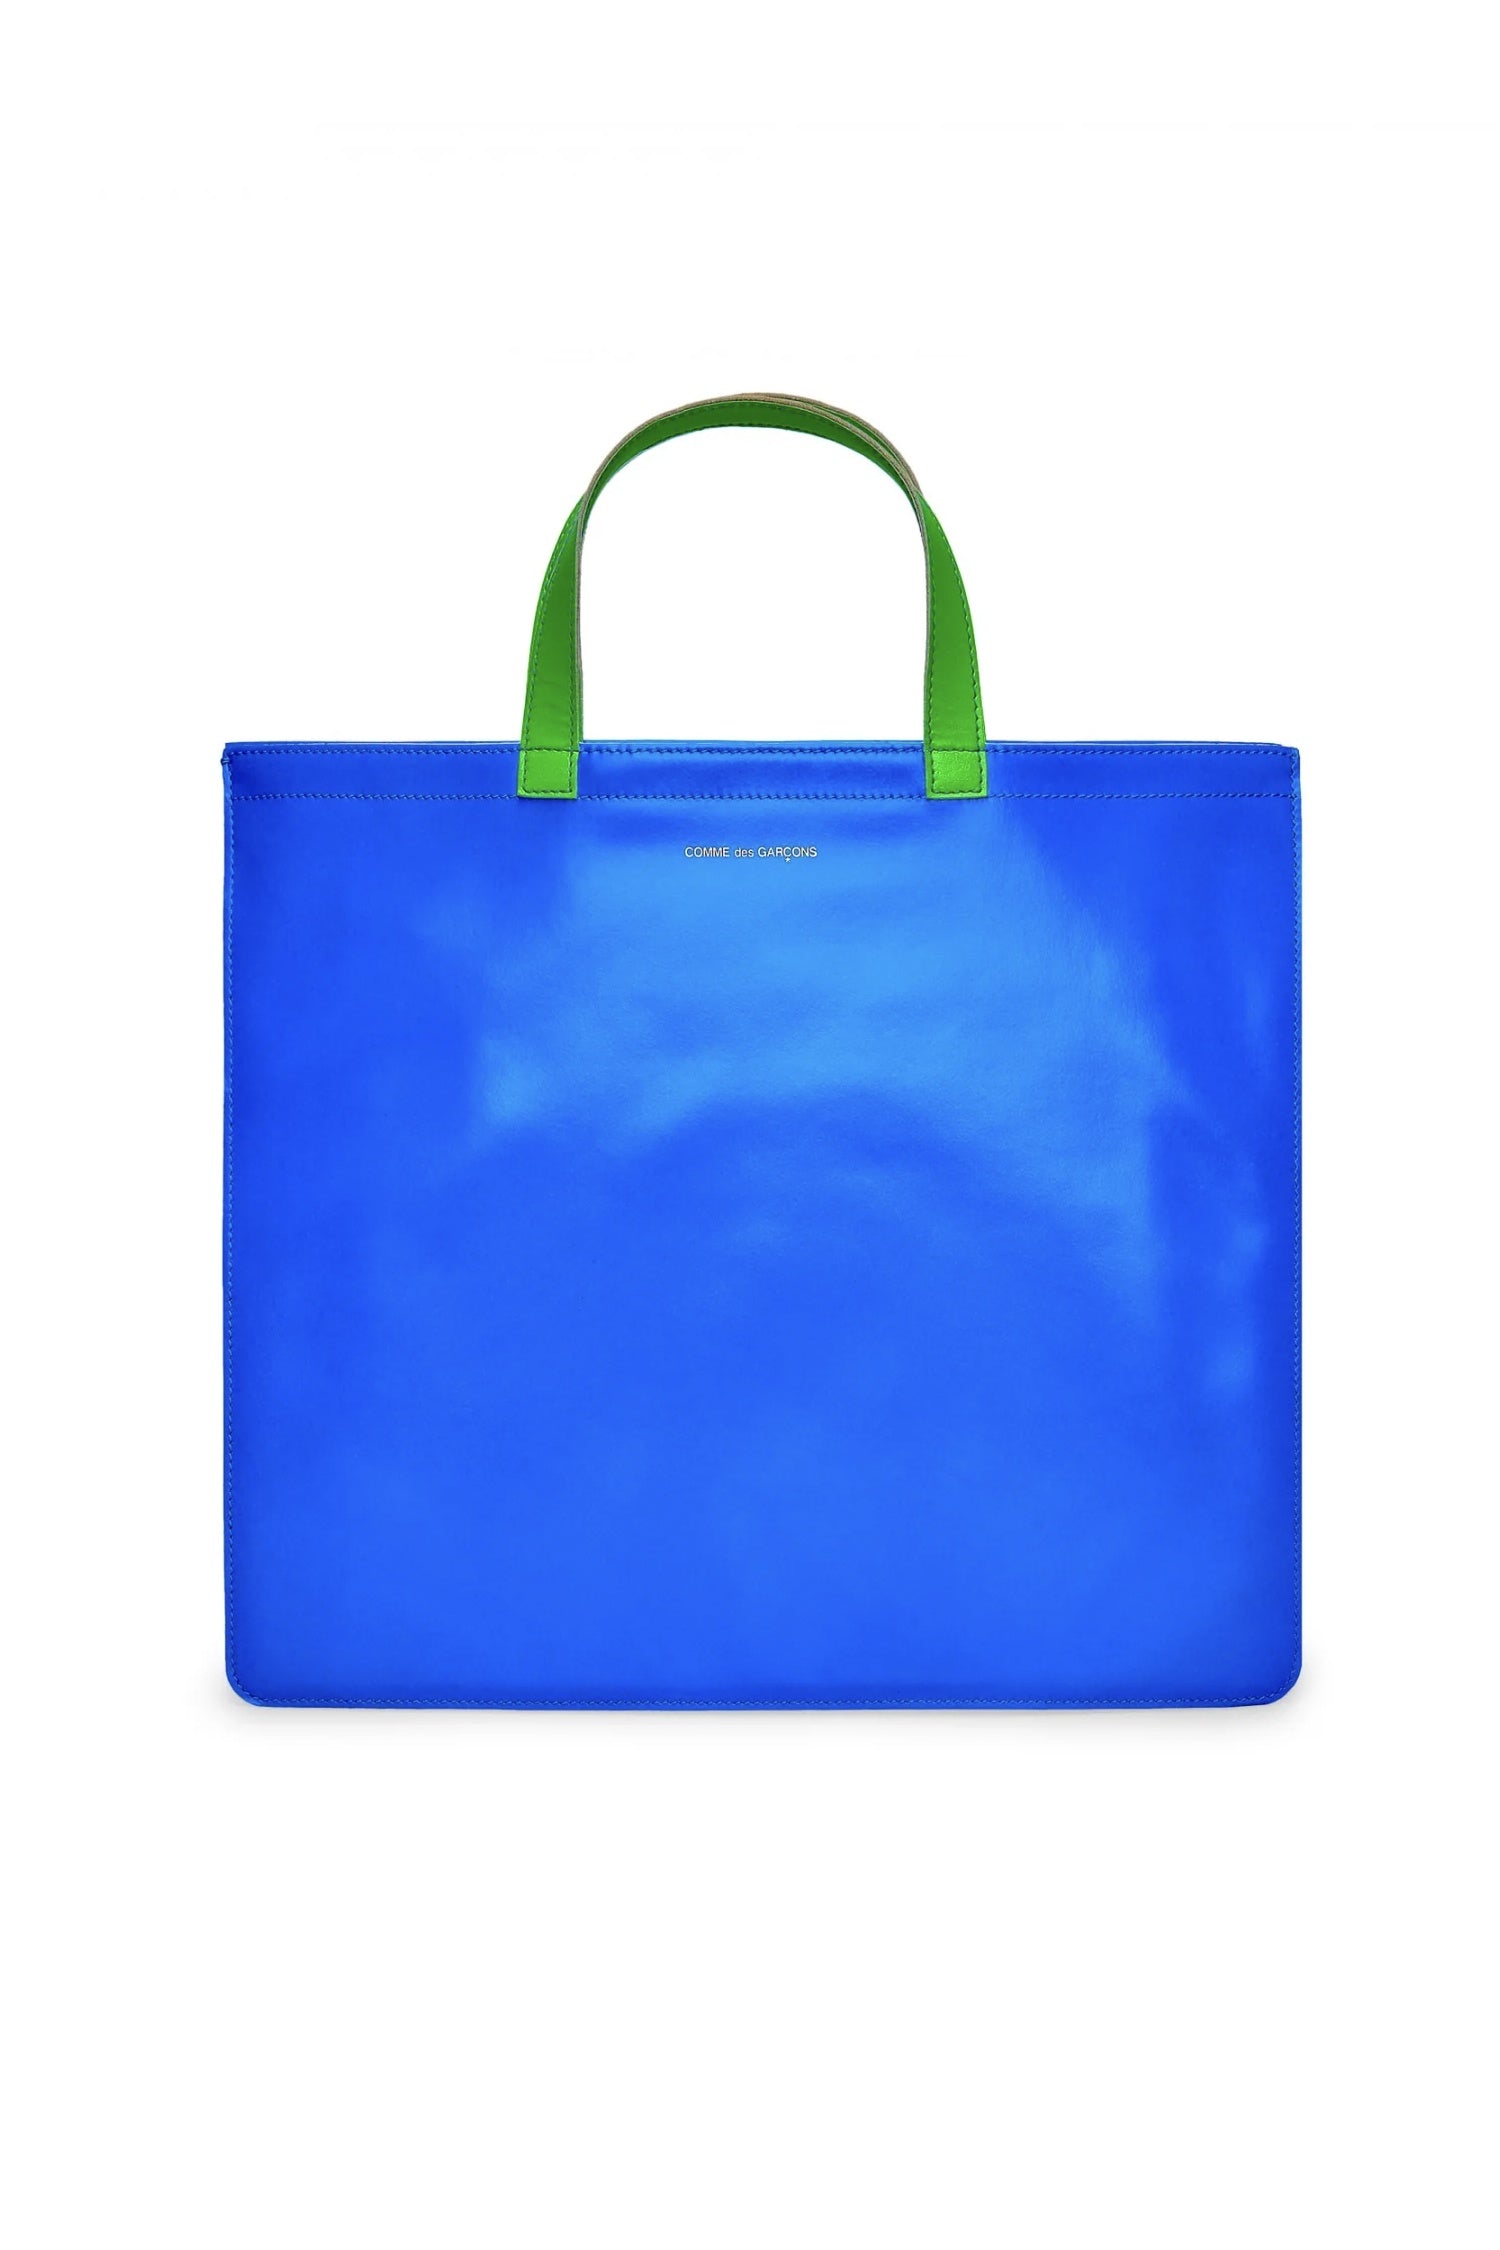 SUPER FLUO TOTE BAG IN ORANGE/BLUE, W24